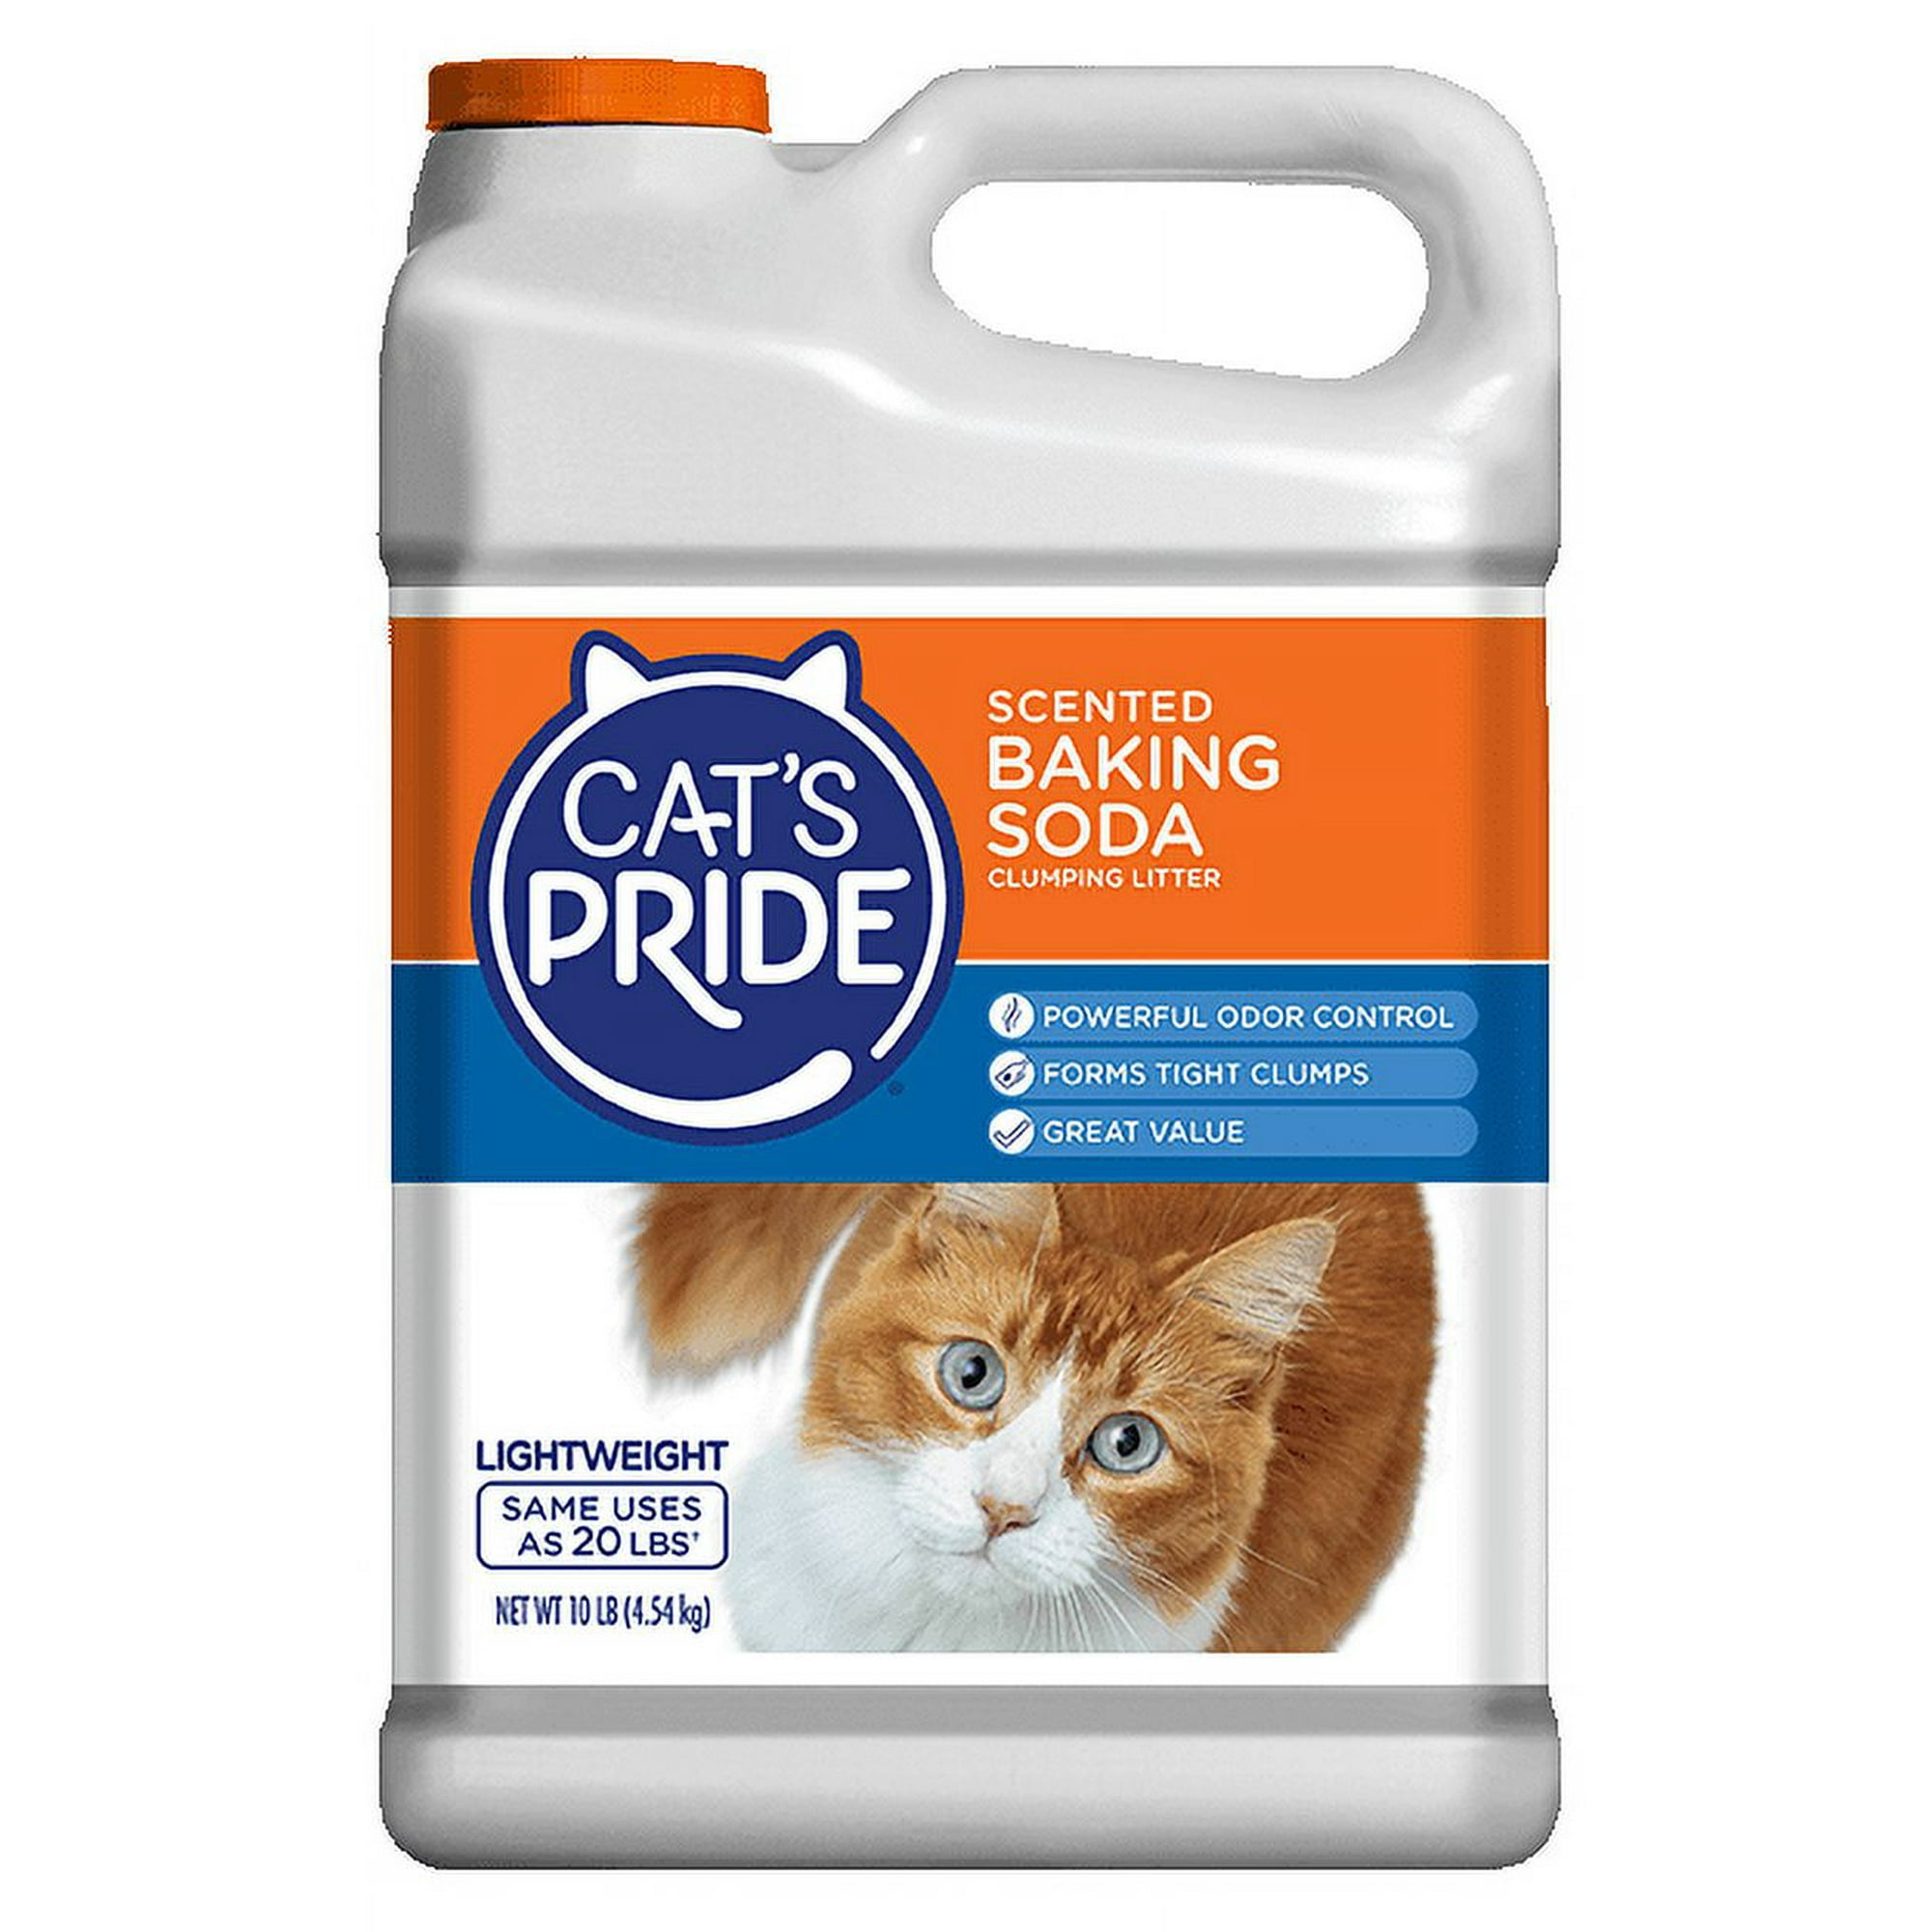 Arena para Gato Cats Best 20 Lts 8.6 kg OkoPlus Biodegradable OkoPlus Cats  Best 20 Litros